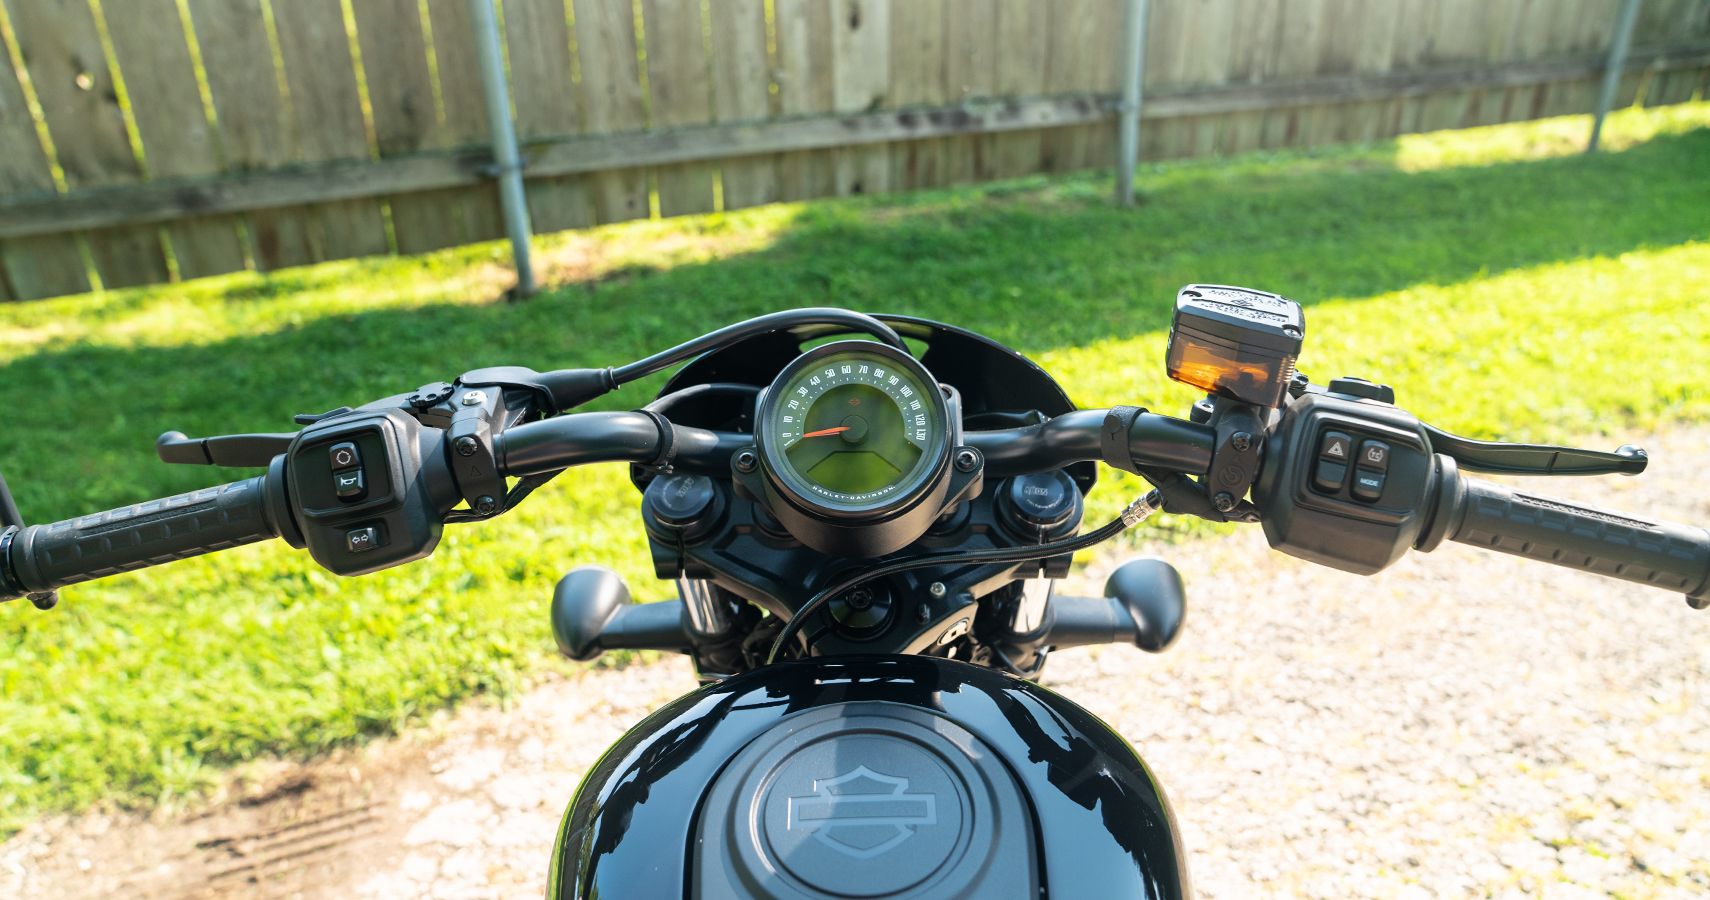 2022 Harley-Davidson Nightster handlebar